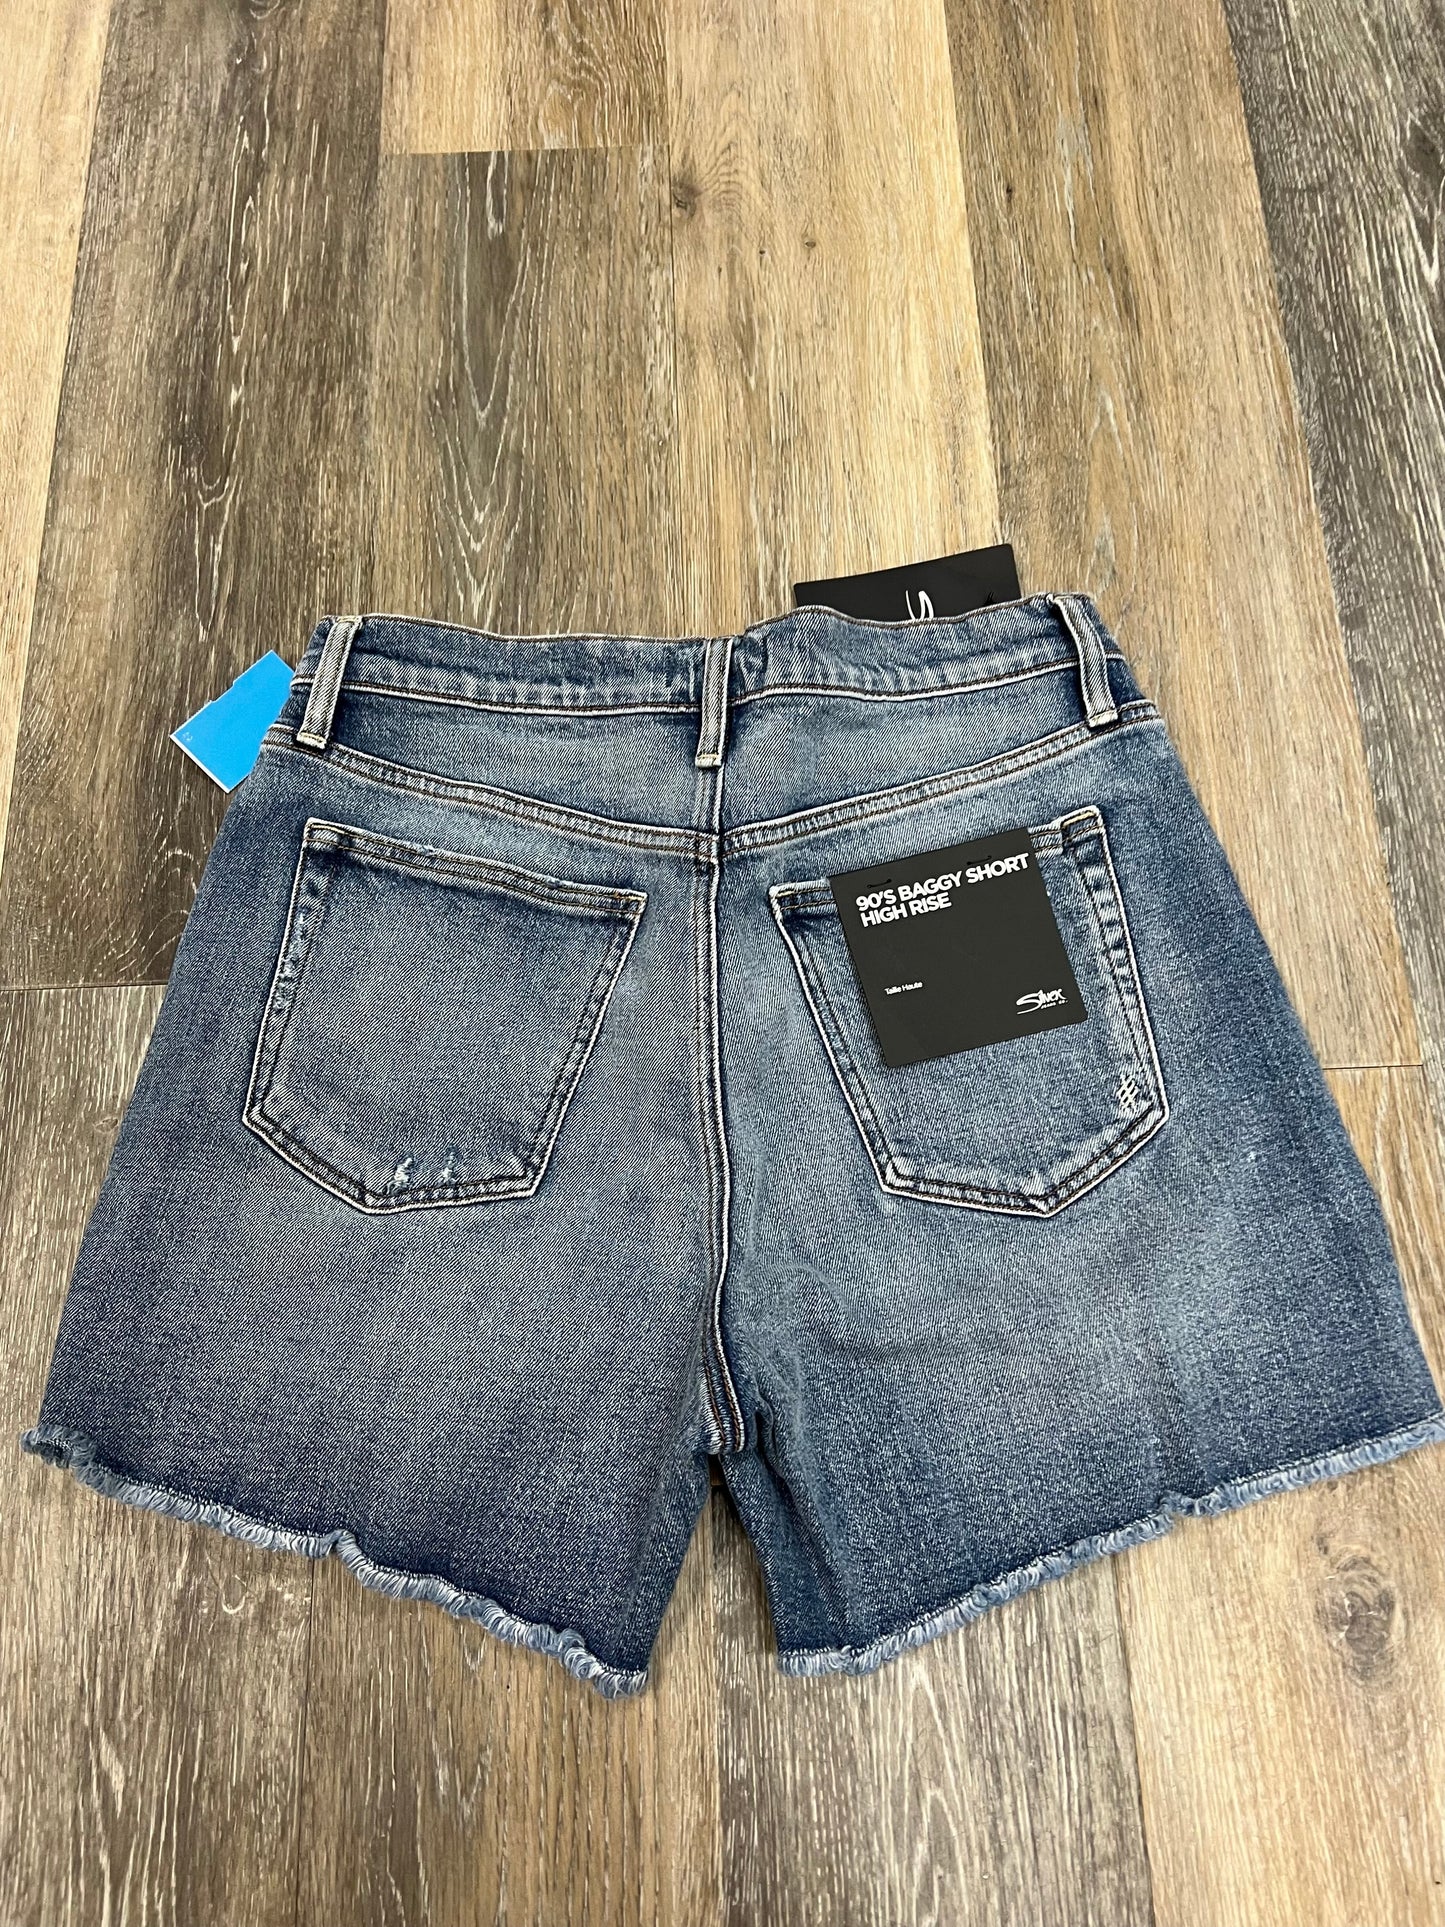 Blue Denim Shorts Silver, Size 6/28